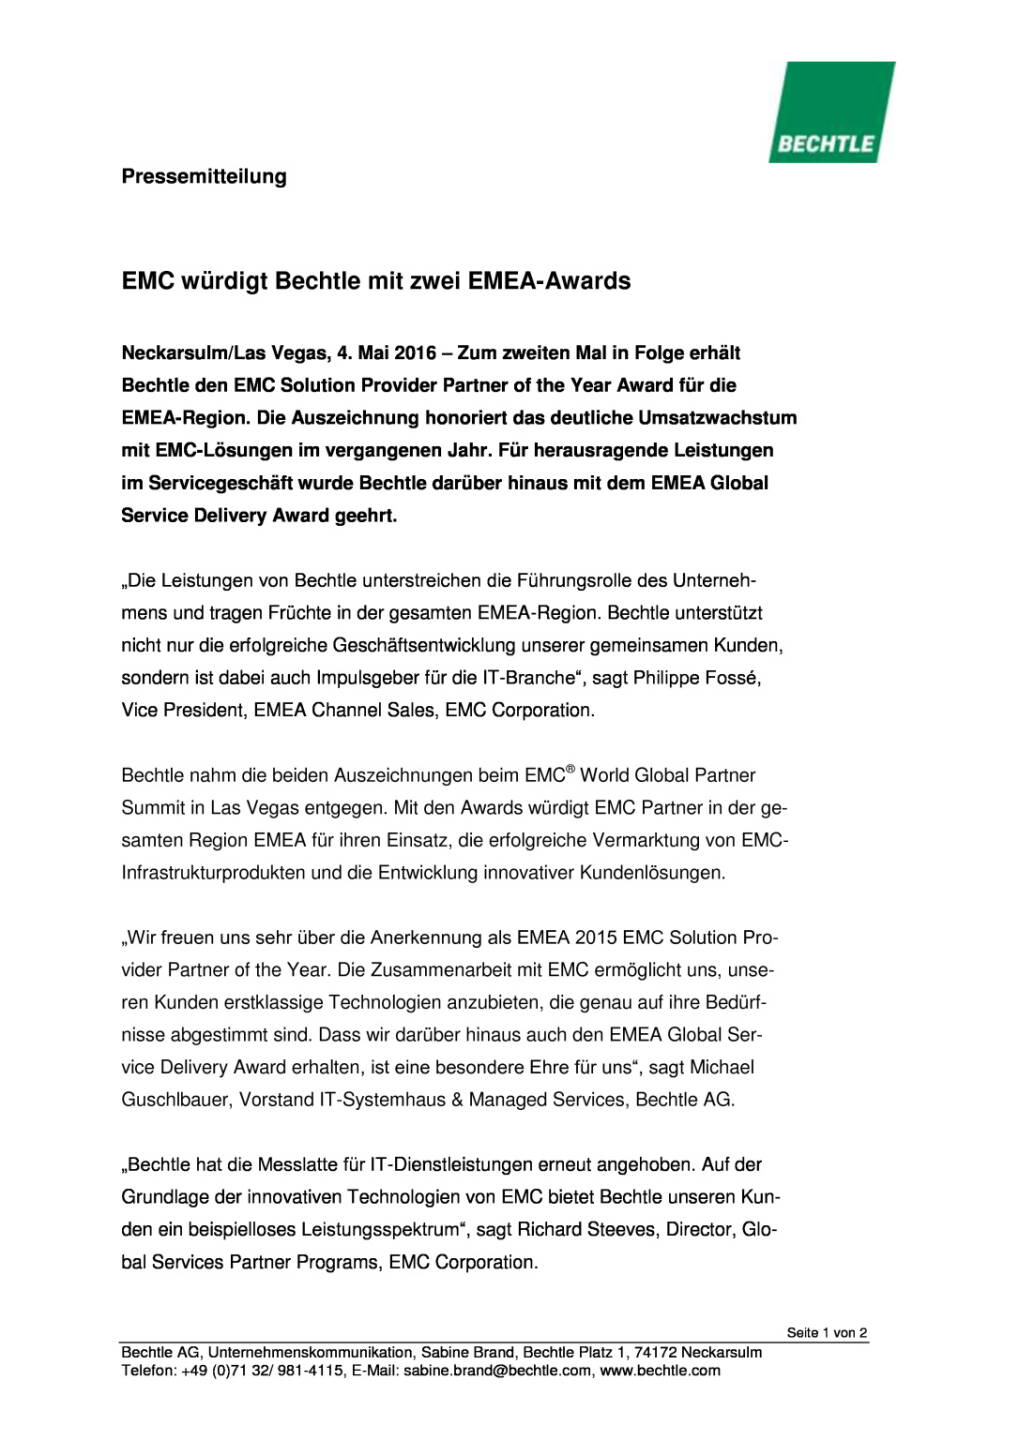 Bechtle: EMC Solution Provider Partner of the Year Award, Seite 1/2, komplettes Dokument unter http://boerse-social.com/static/uploads/file_1013_bechtle_emc_solution_provider_partner_of_the_year_award.pdf